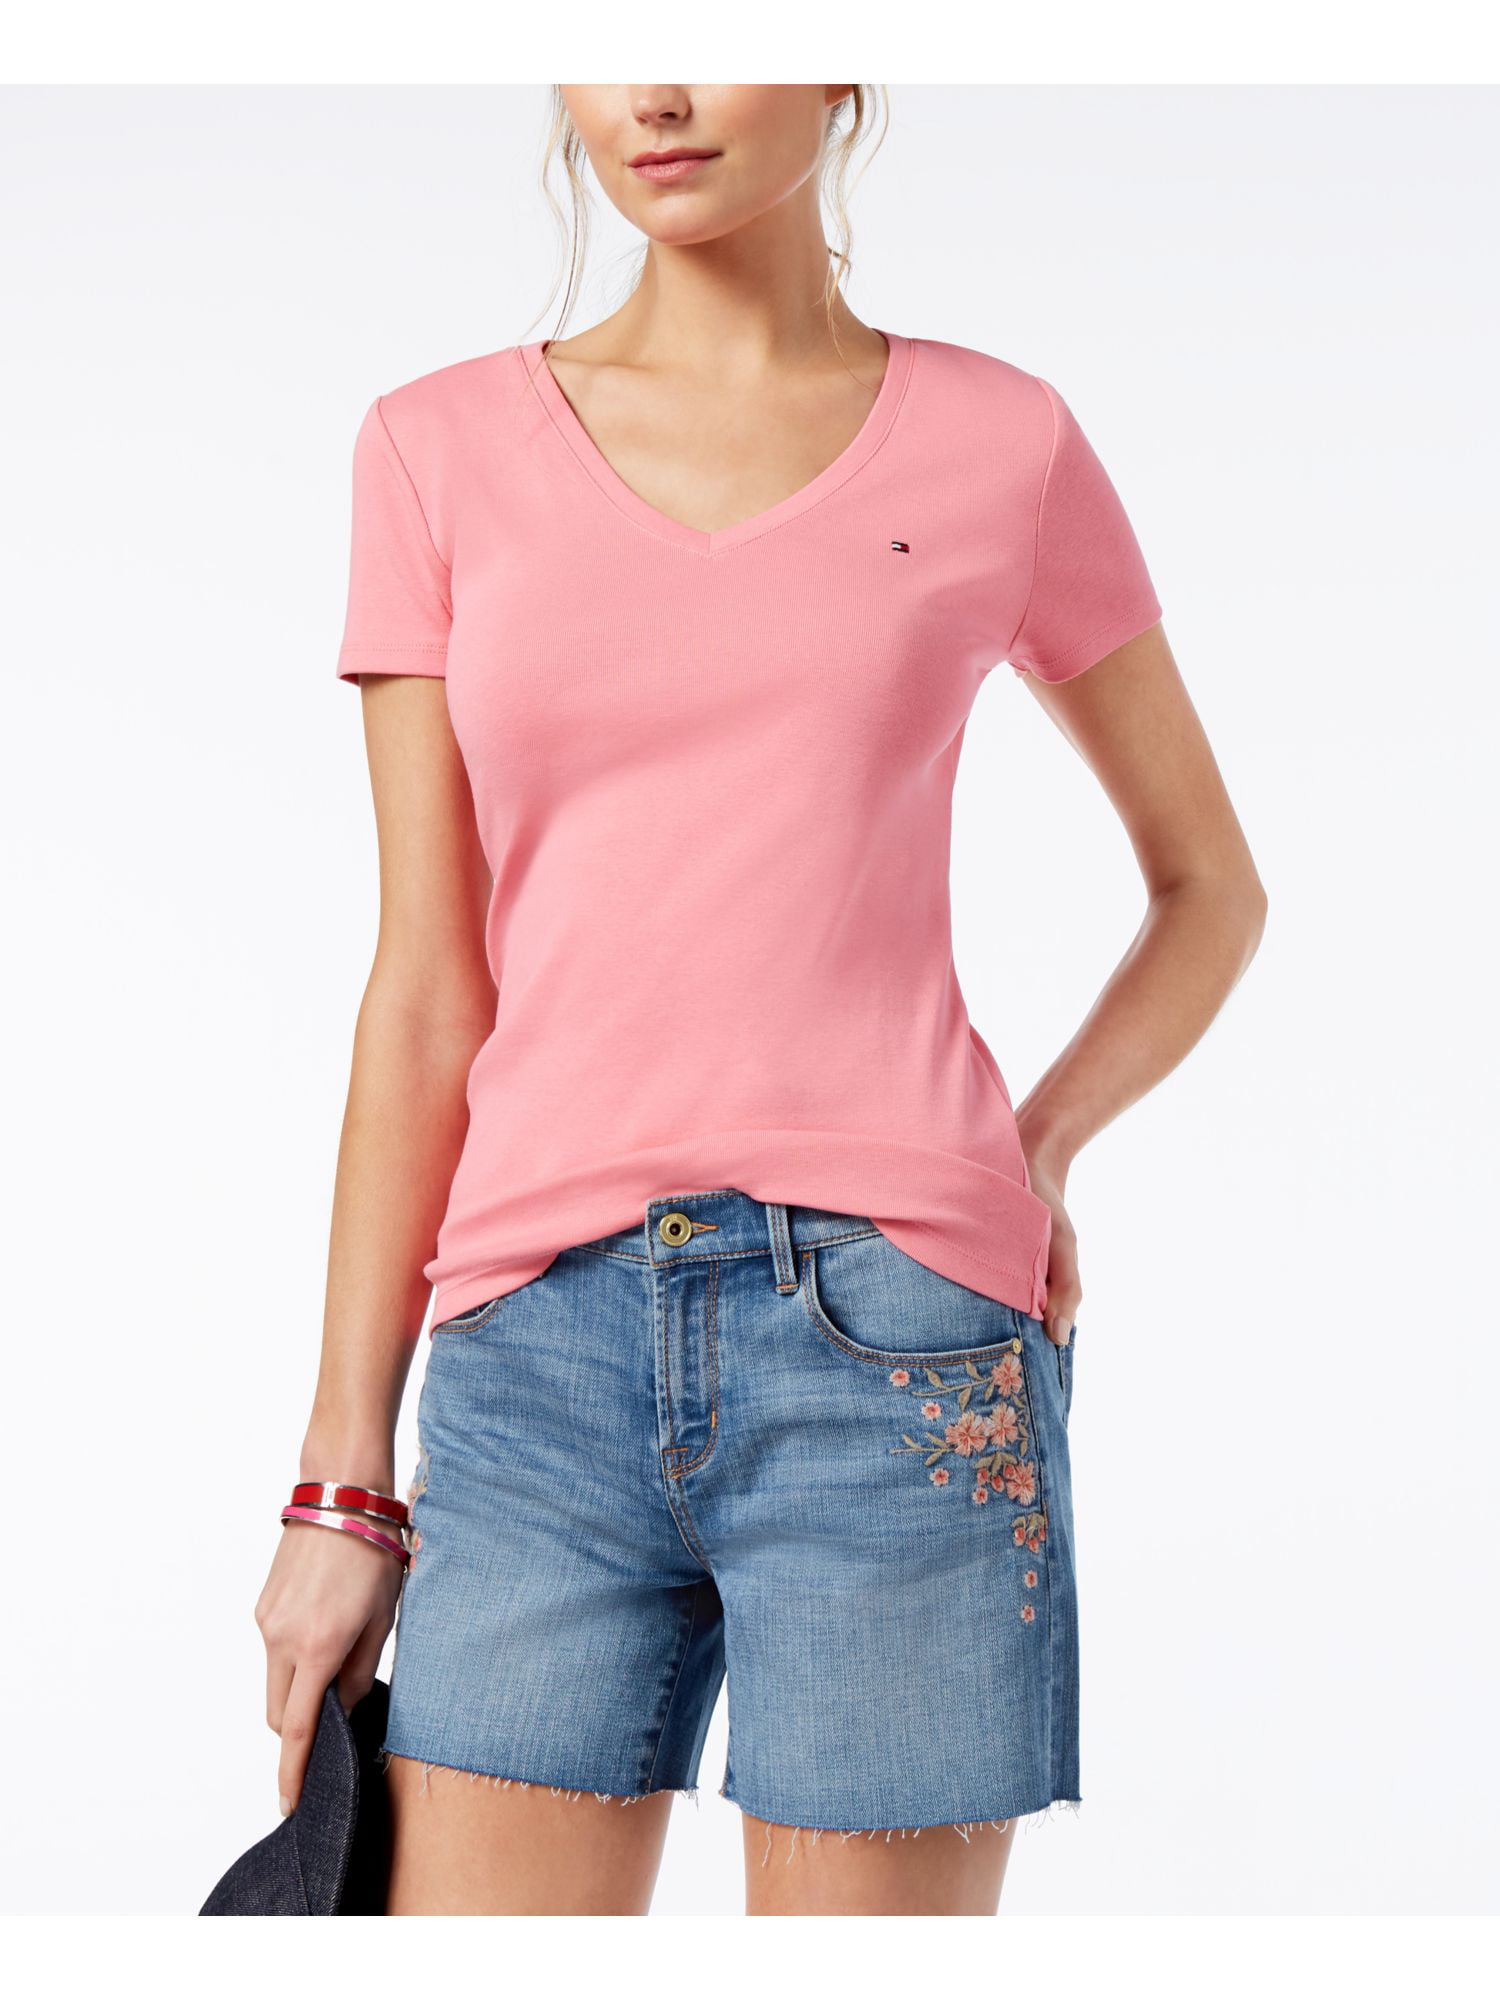 Tommy Hilfiger Womens V-Neck Short Sleeve T-Shirt 